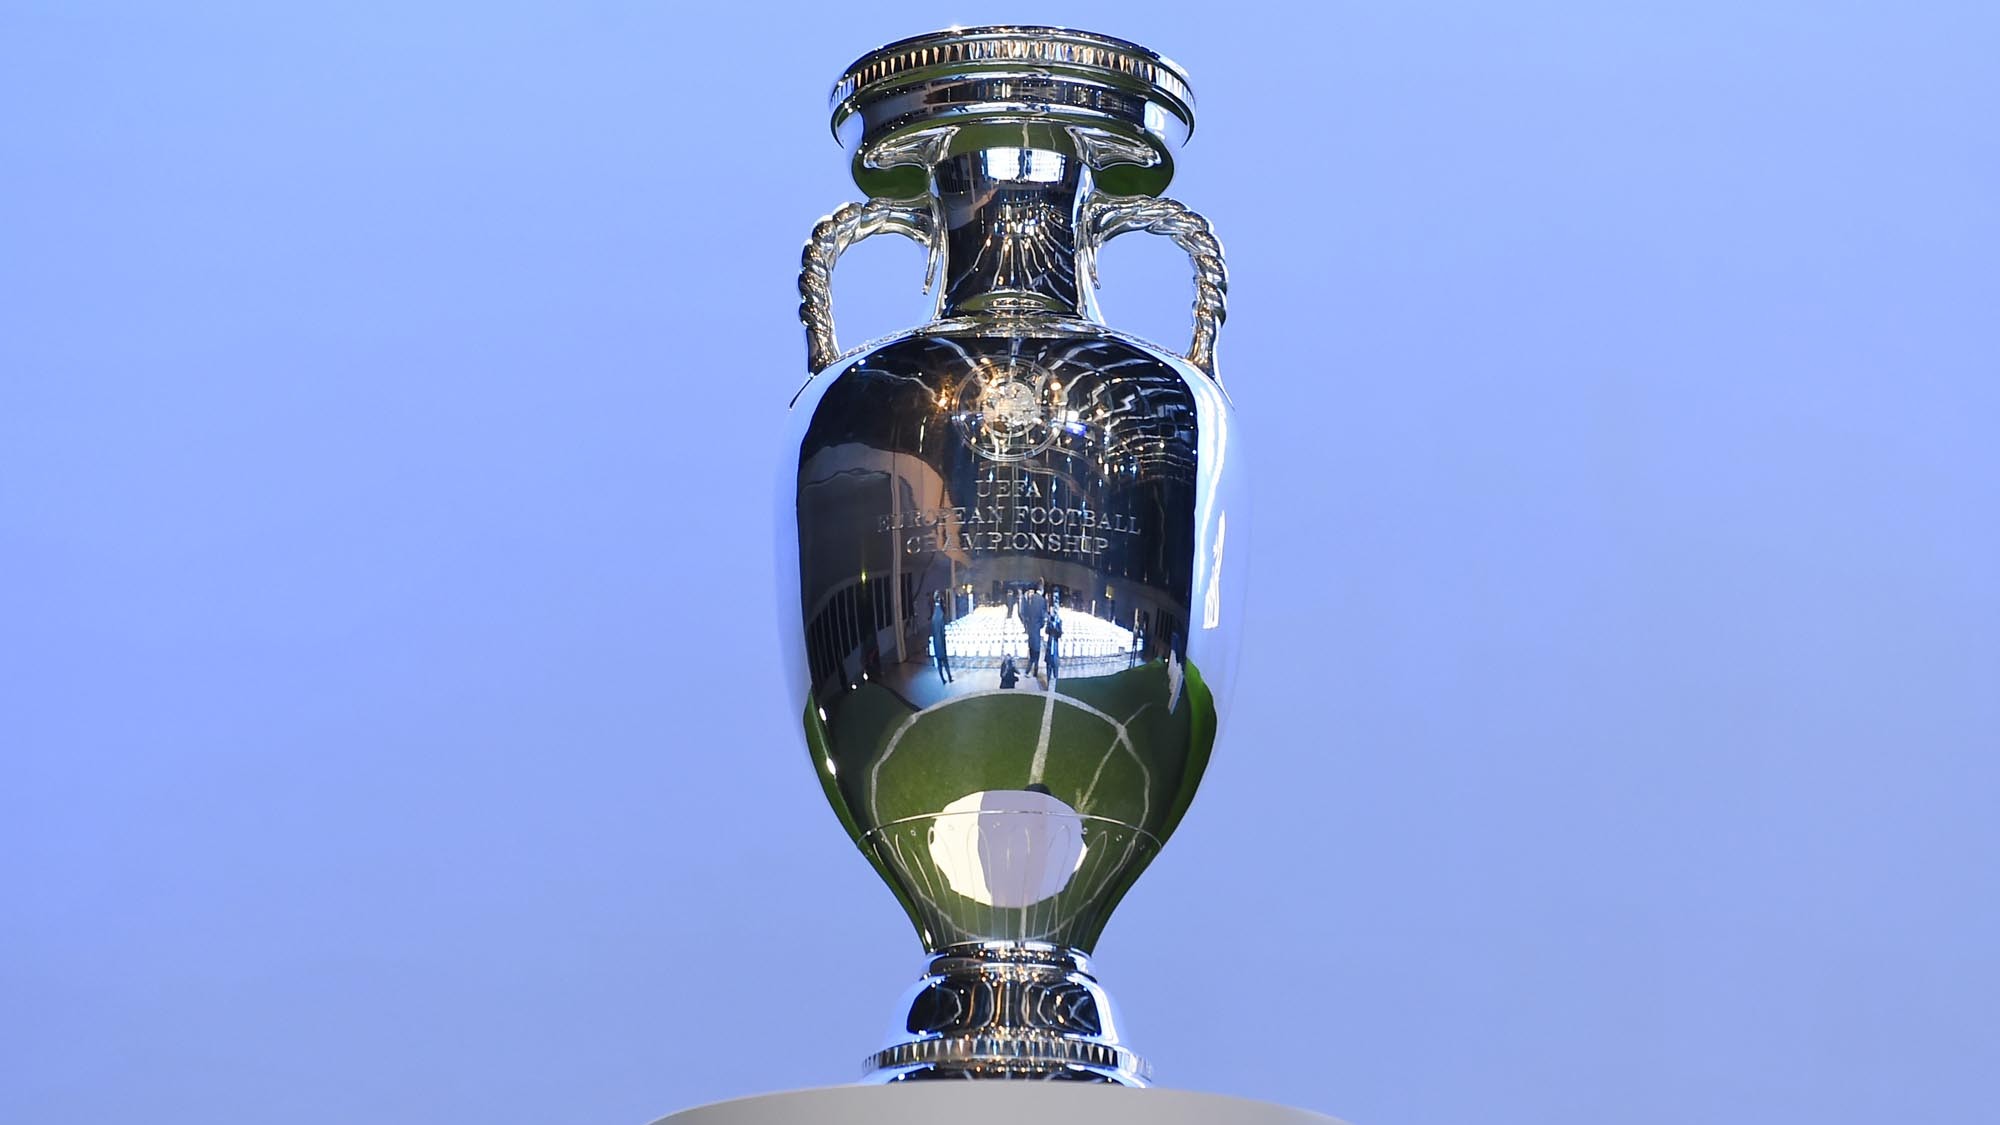 European Football Championship 2028 – Great Britain and Ireland co-host